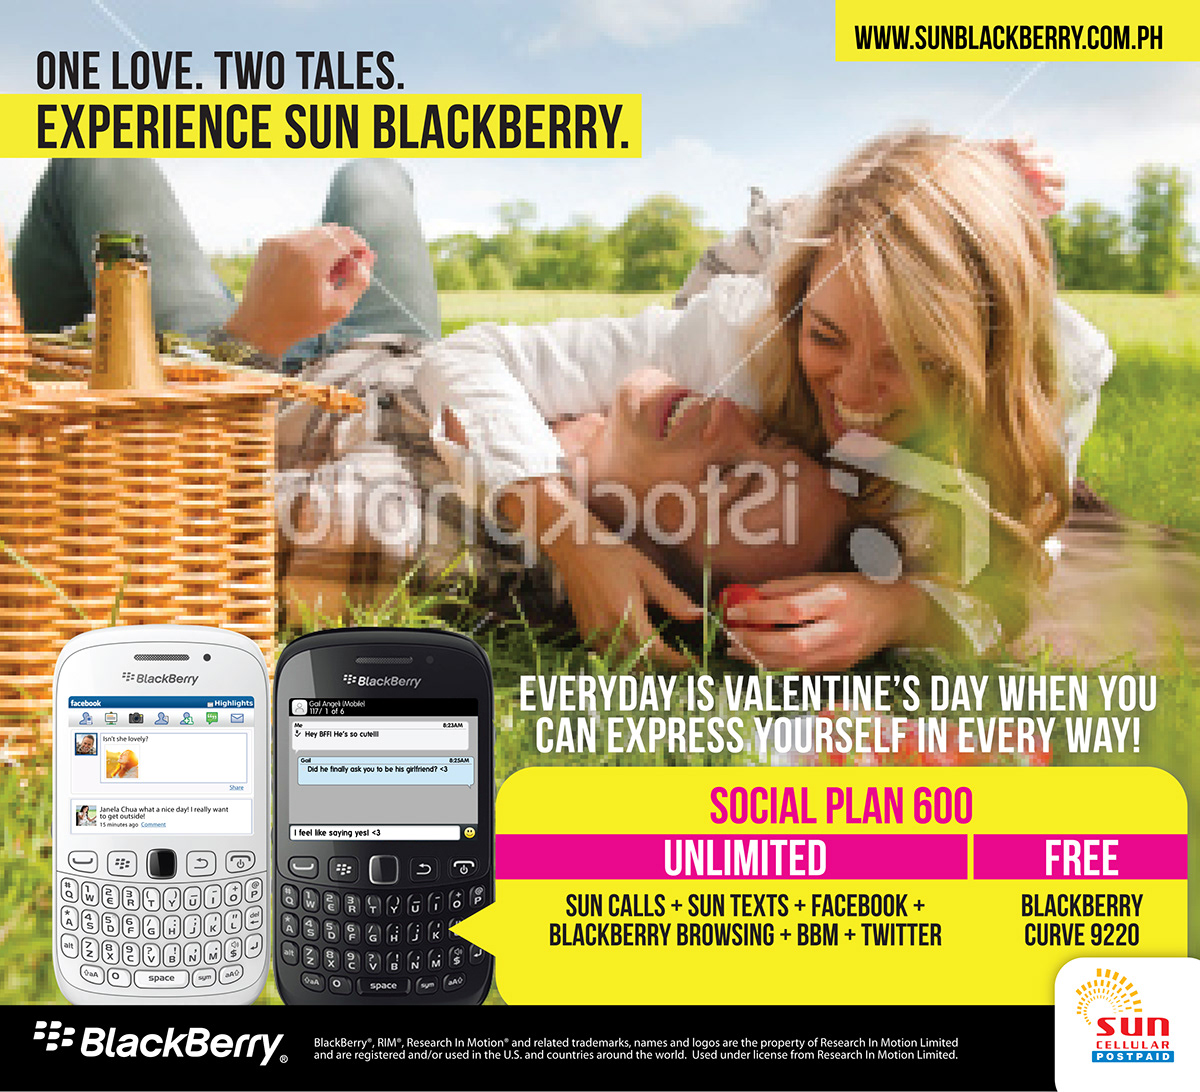 get real Sun blackberry